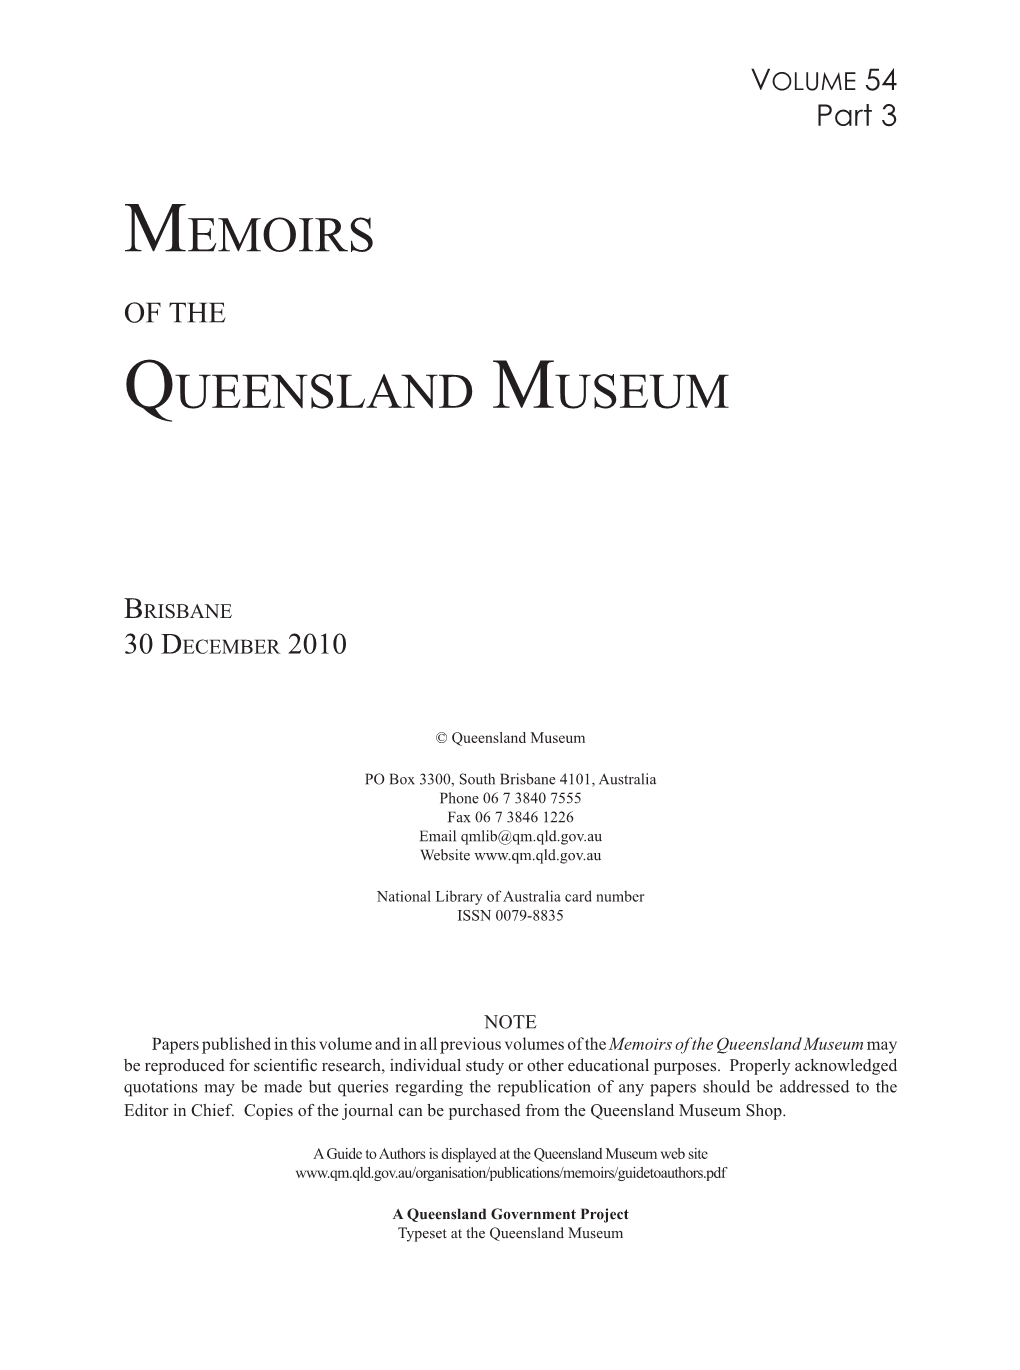 Memoirs of the Queensland Museum